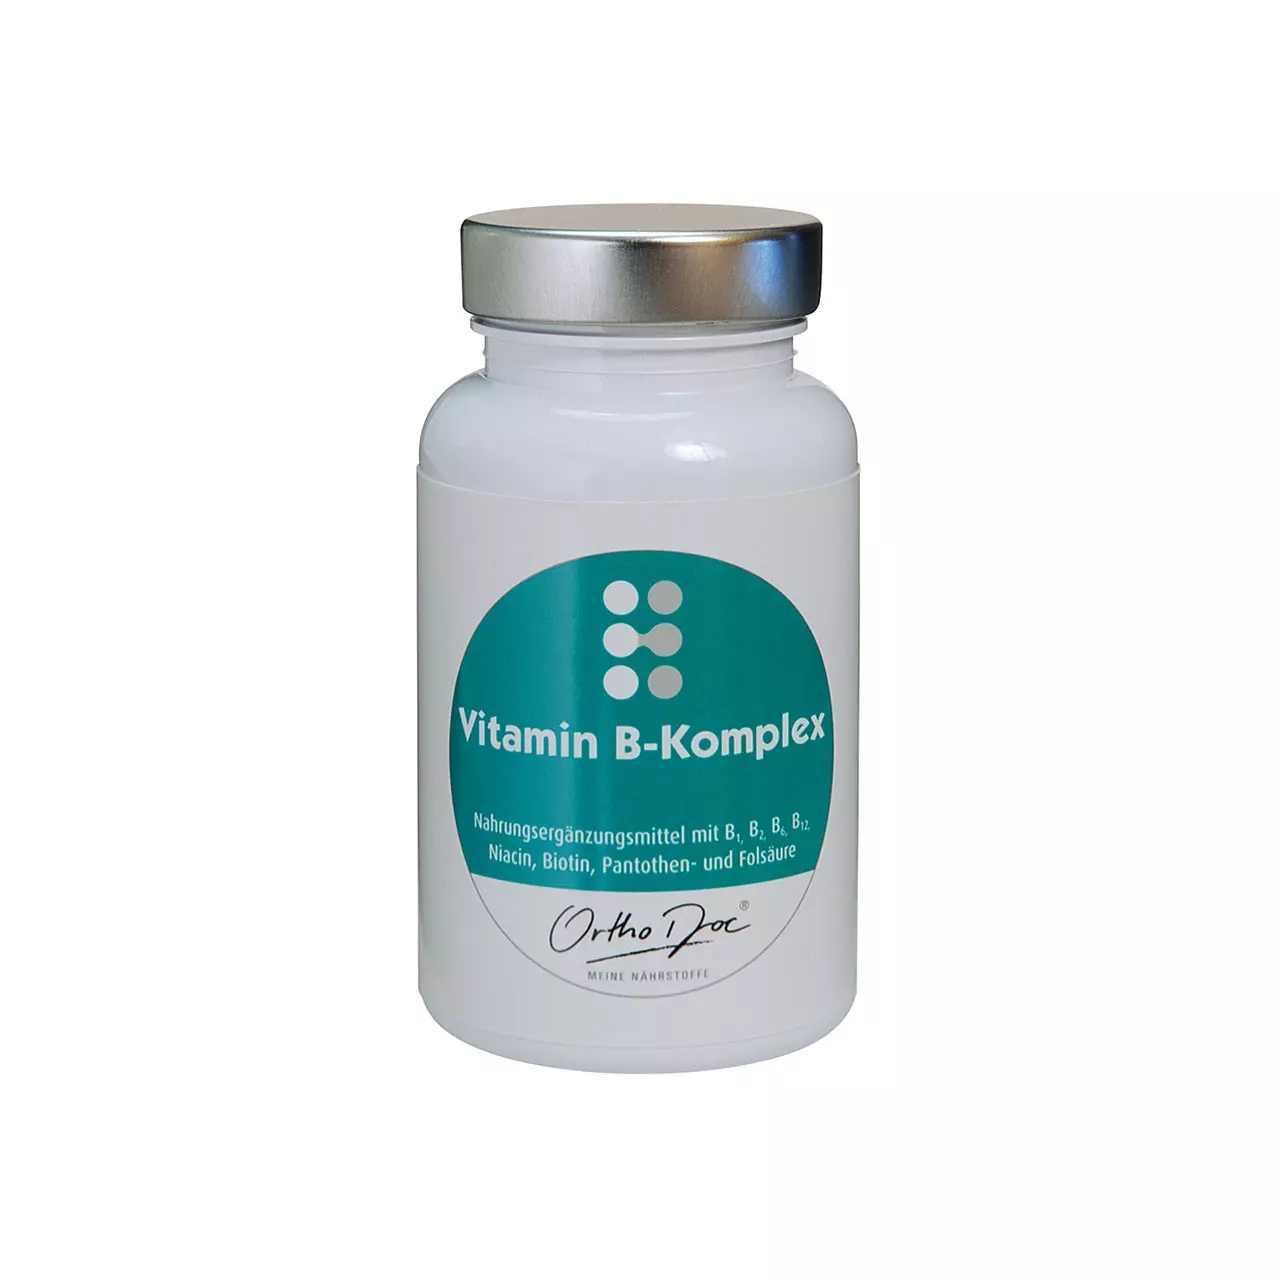 OrthoDoc® Vitamin B-Komplex (60 Kaps.)